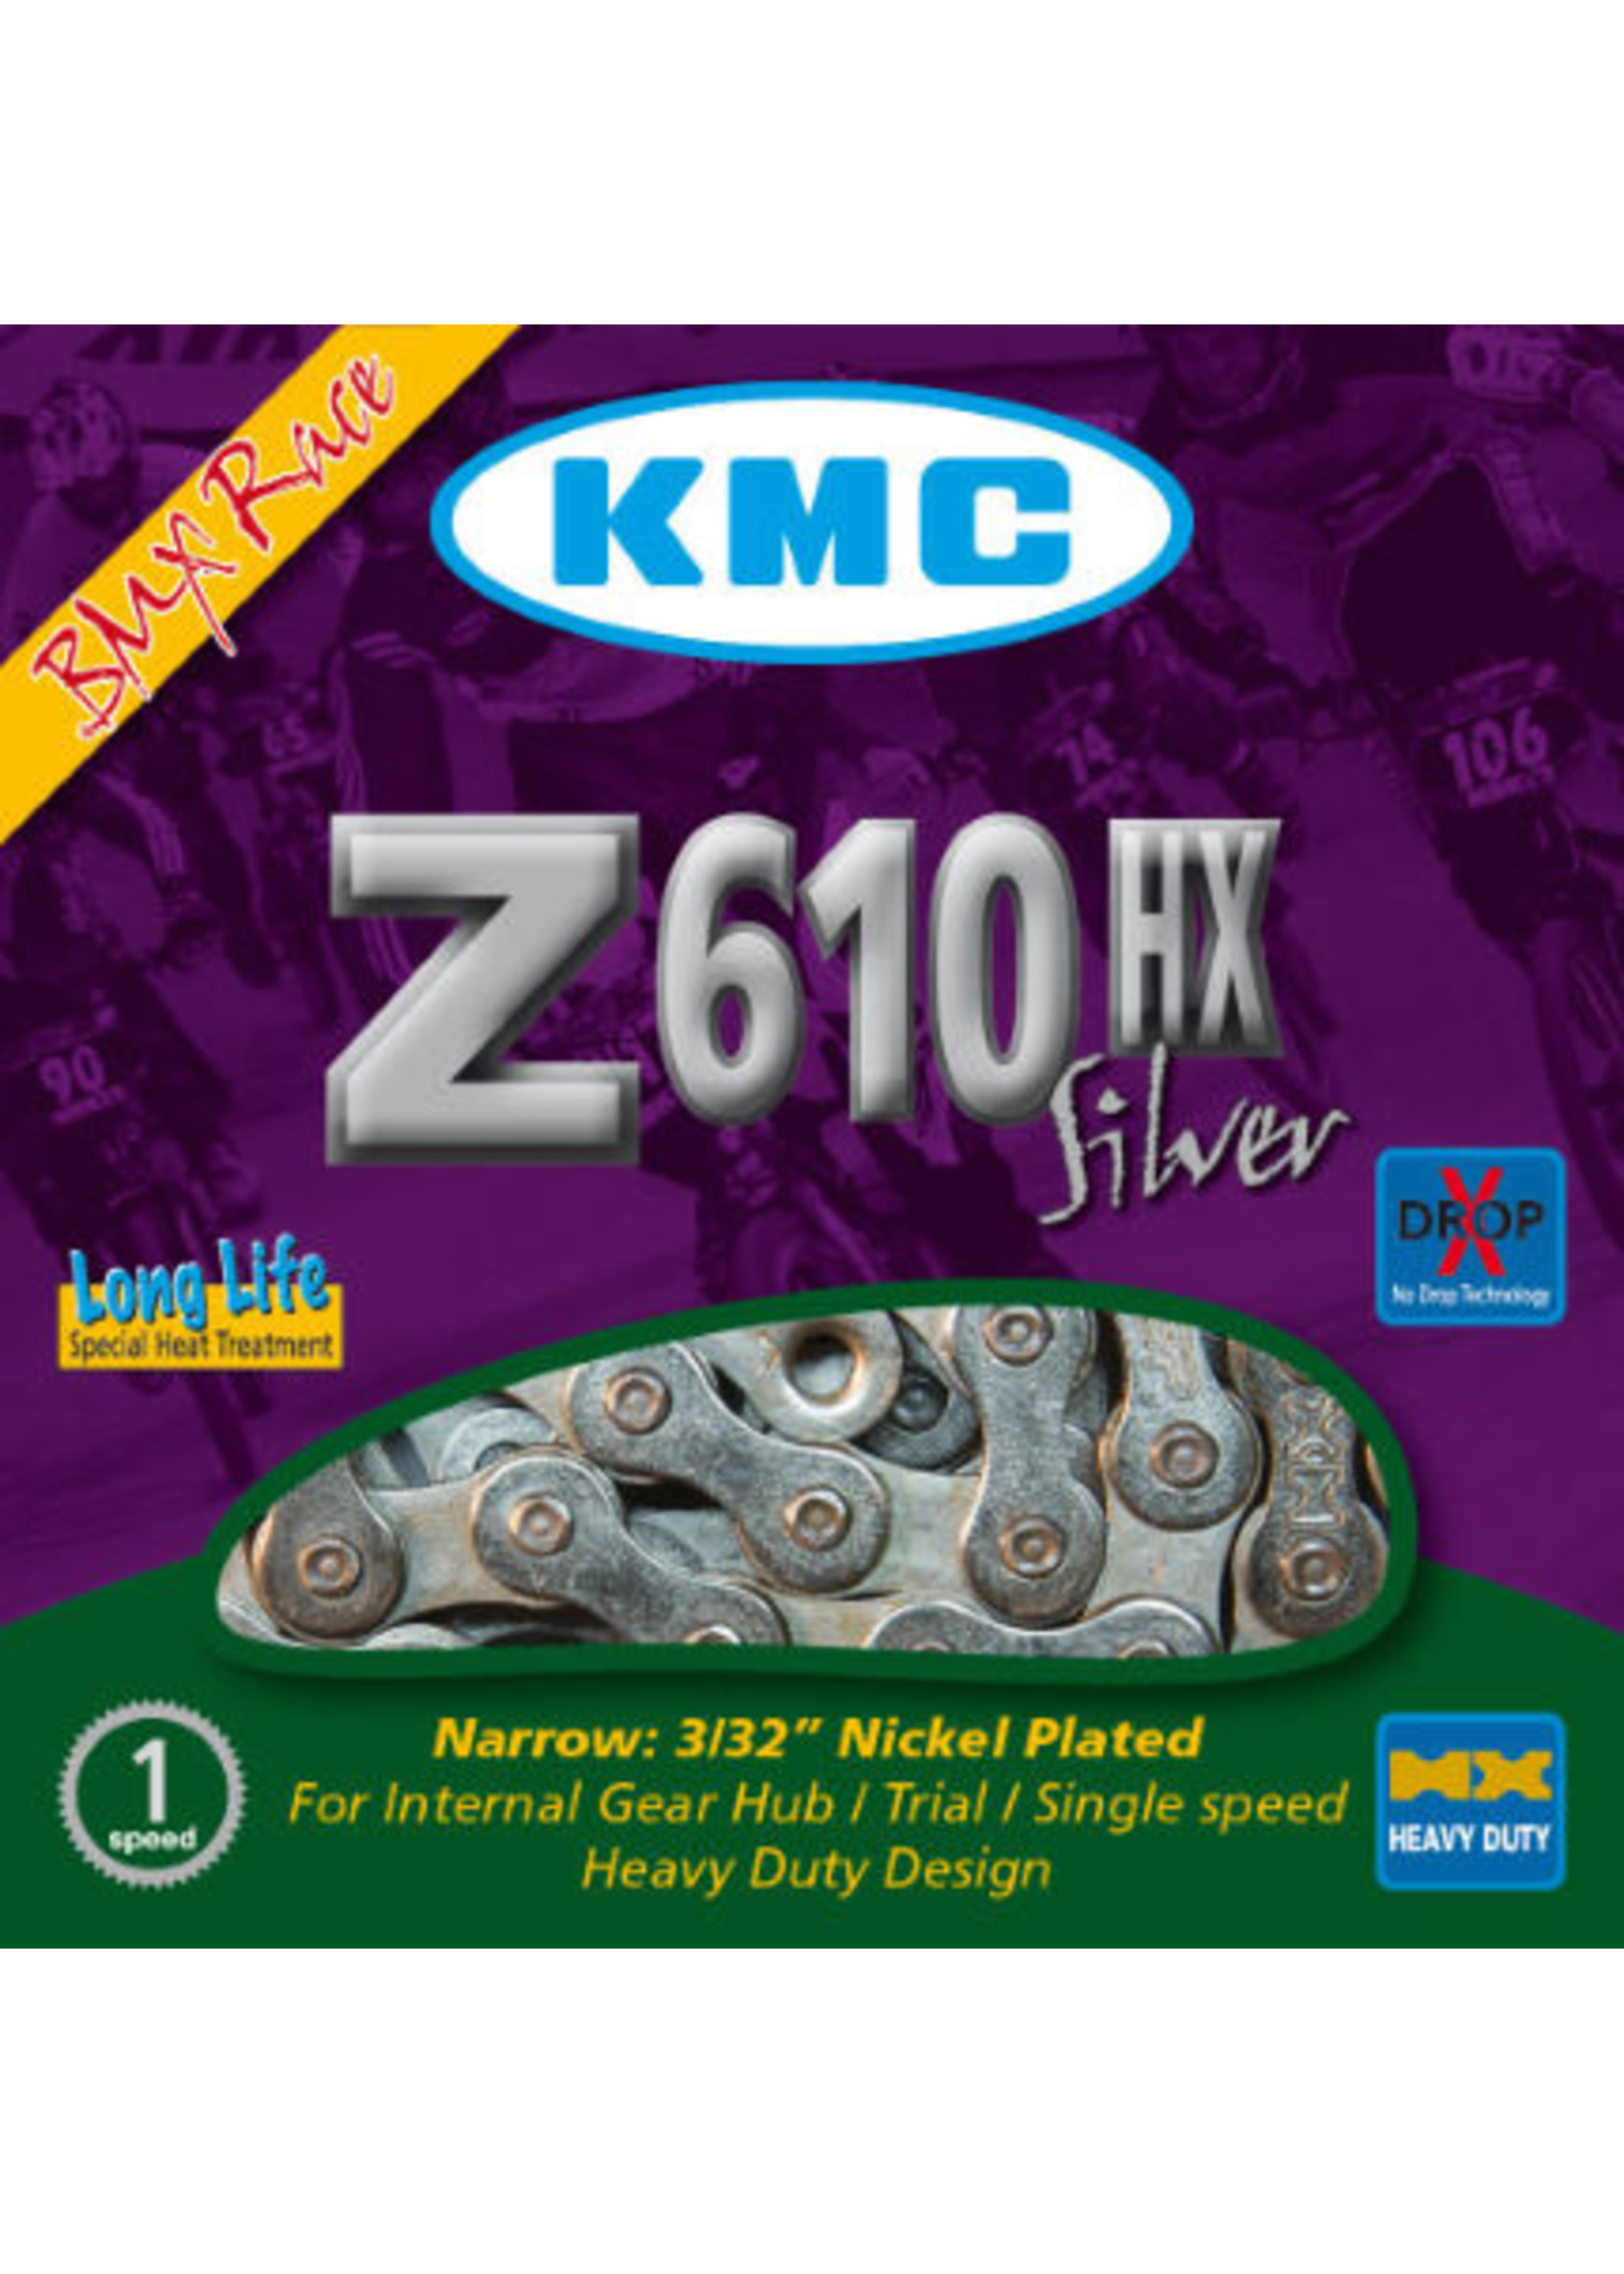 Kmc KMC 610 HX SINGLE SPEED CHAIN - SILVER